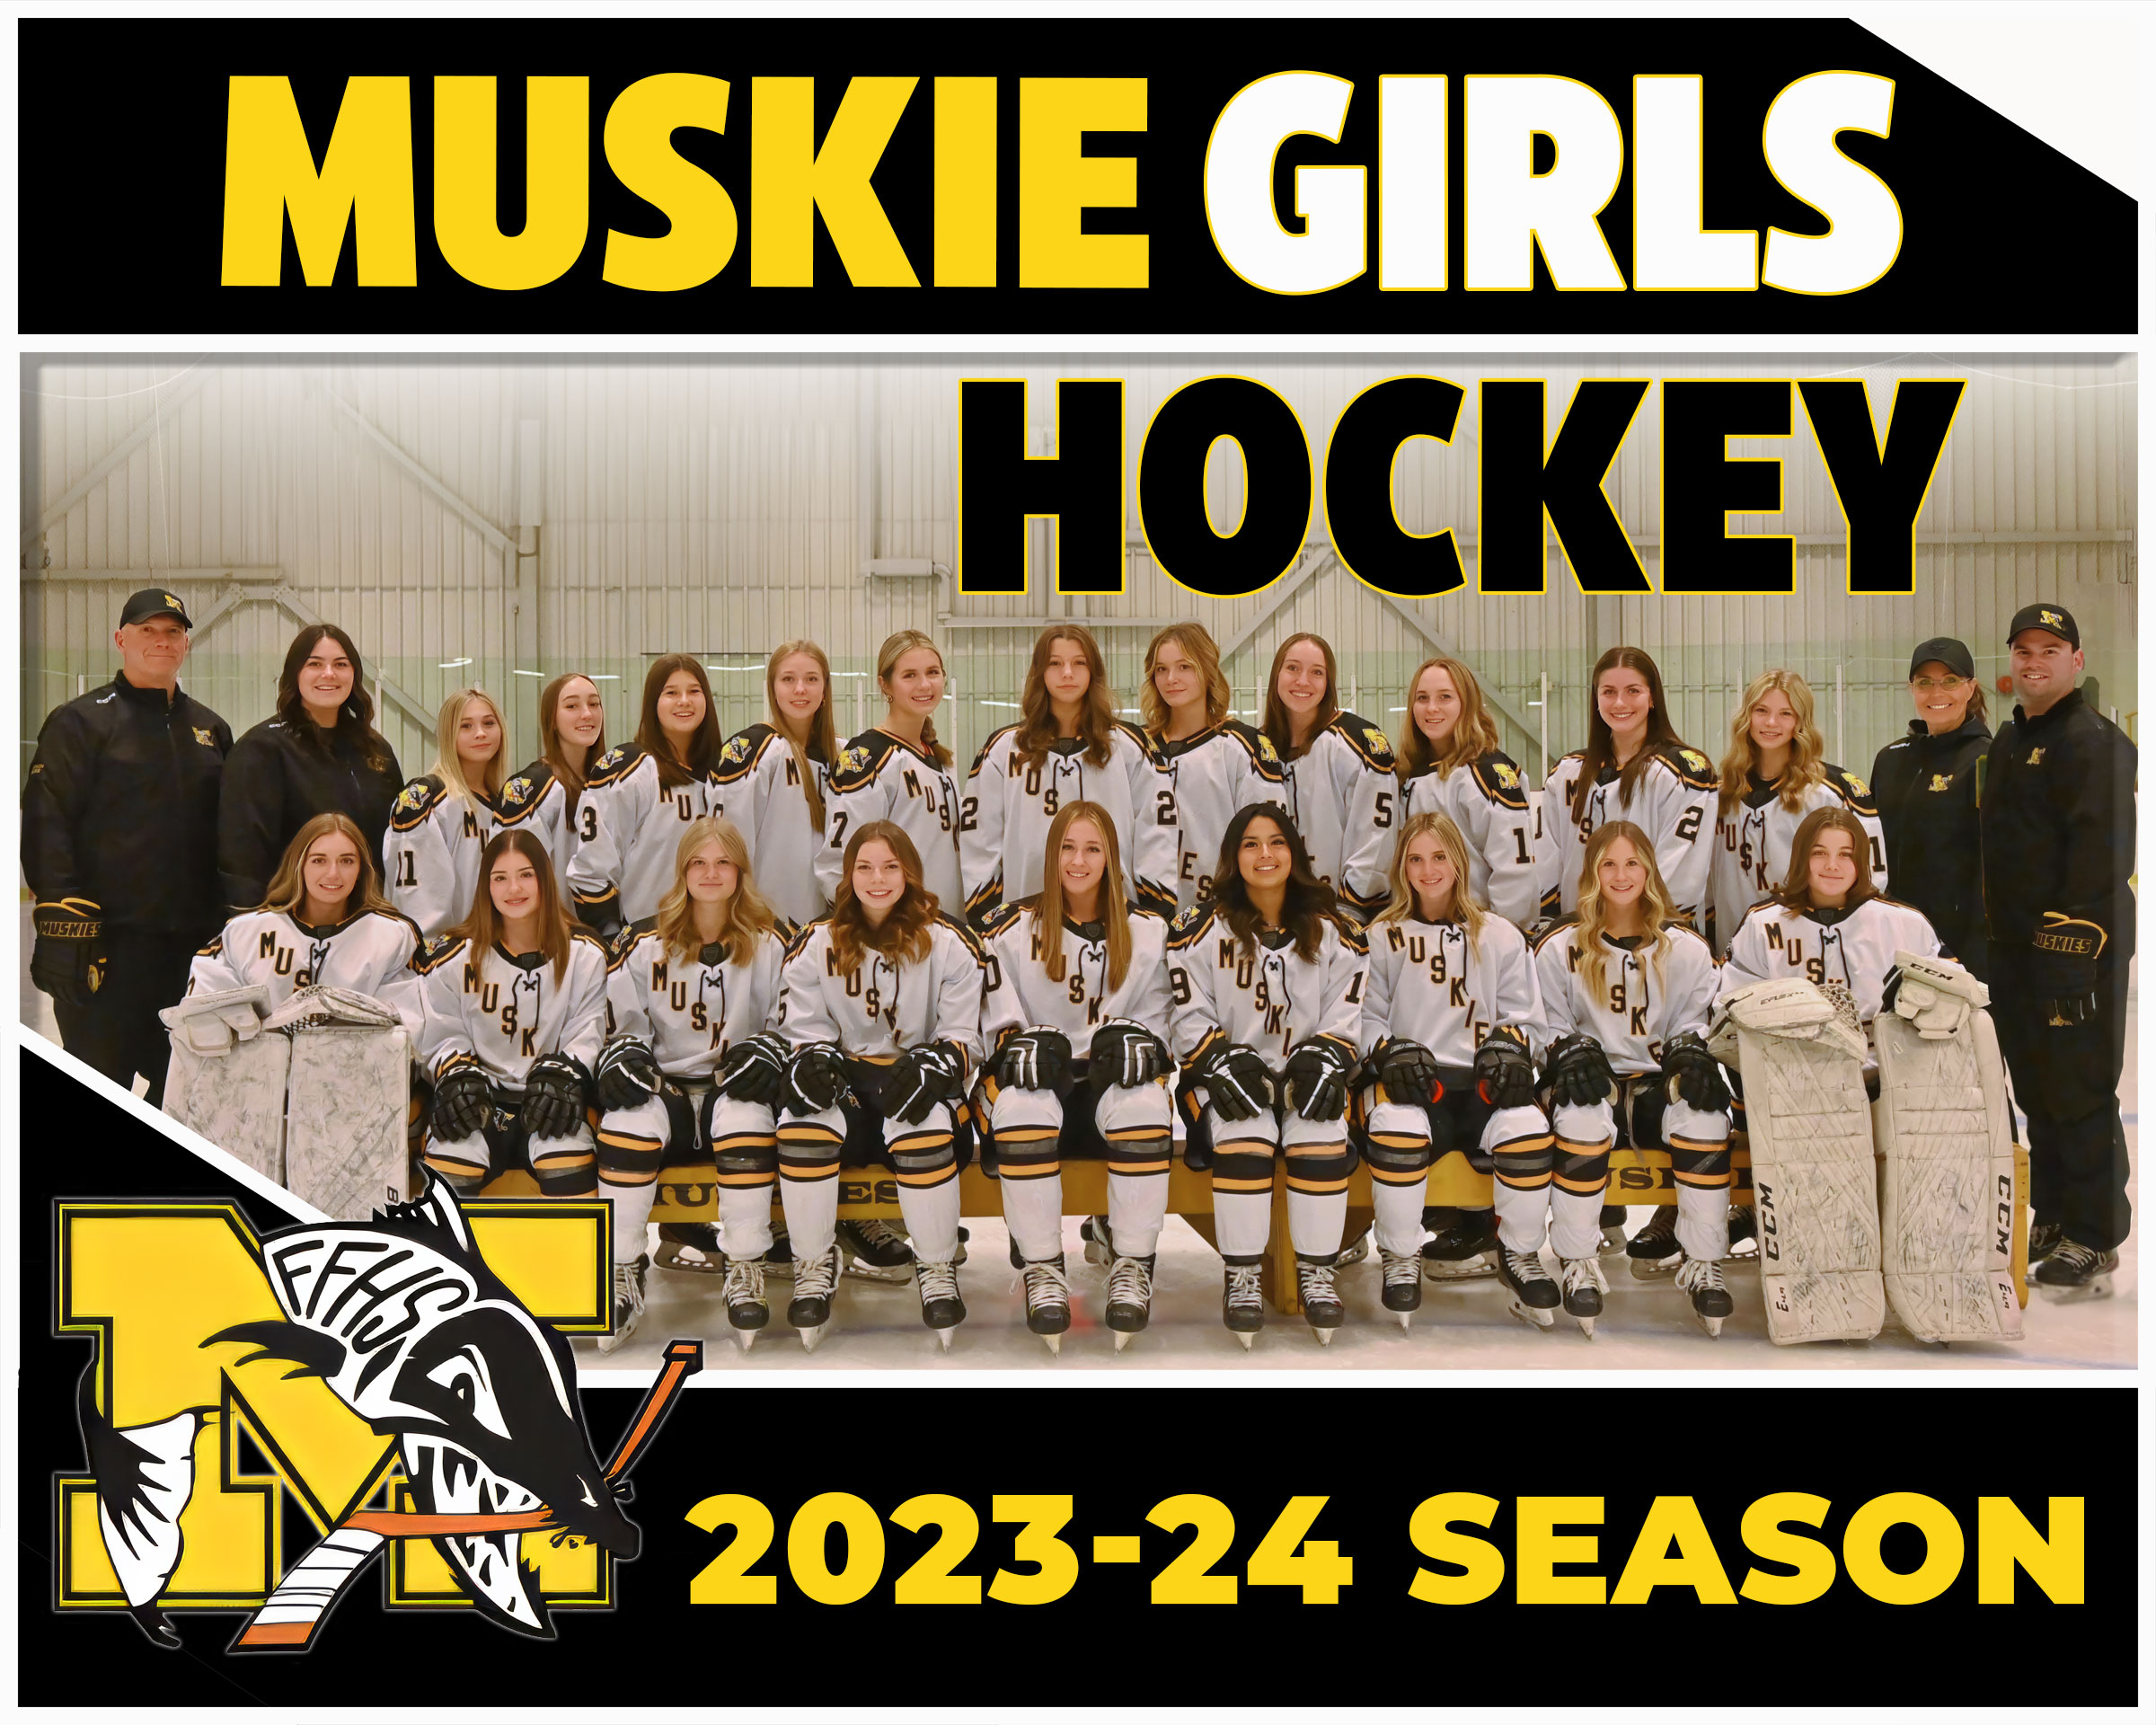 Muskie Girls Hockey Team 2023-24